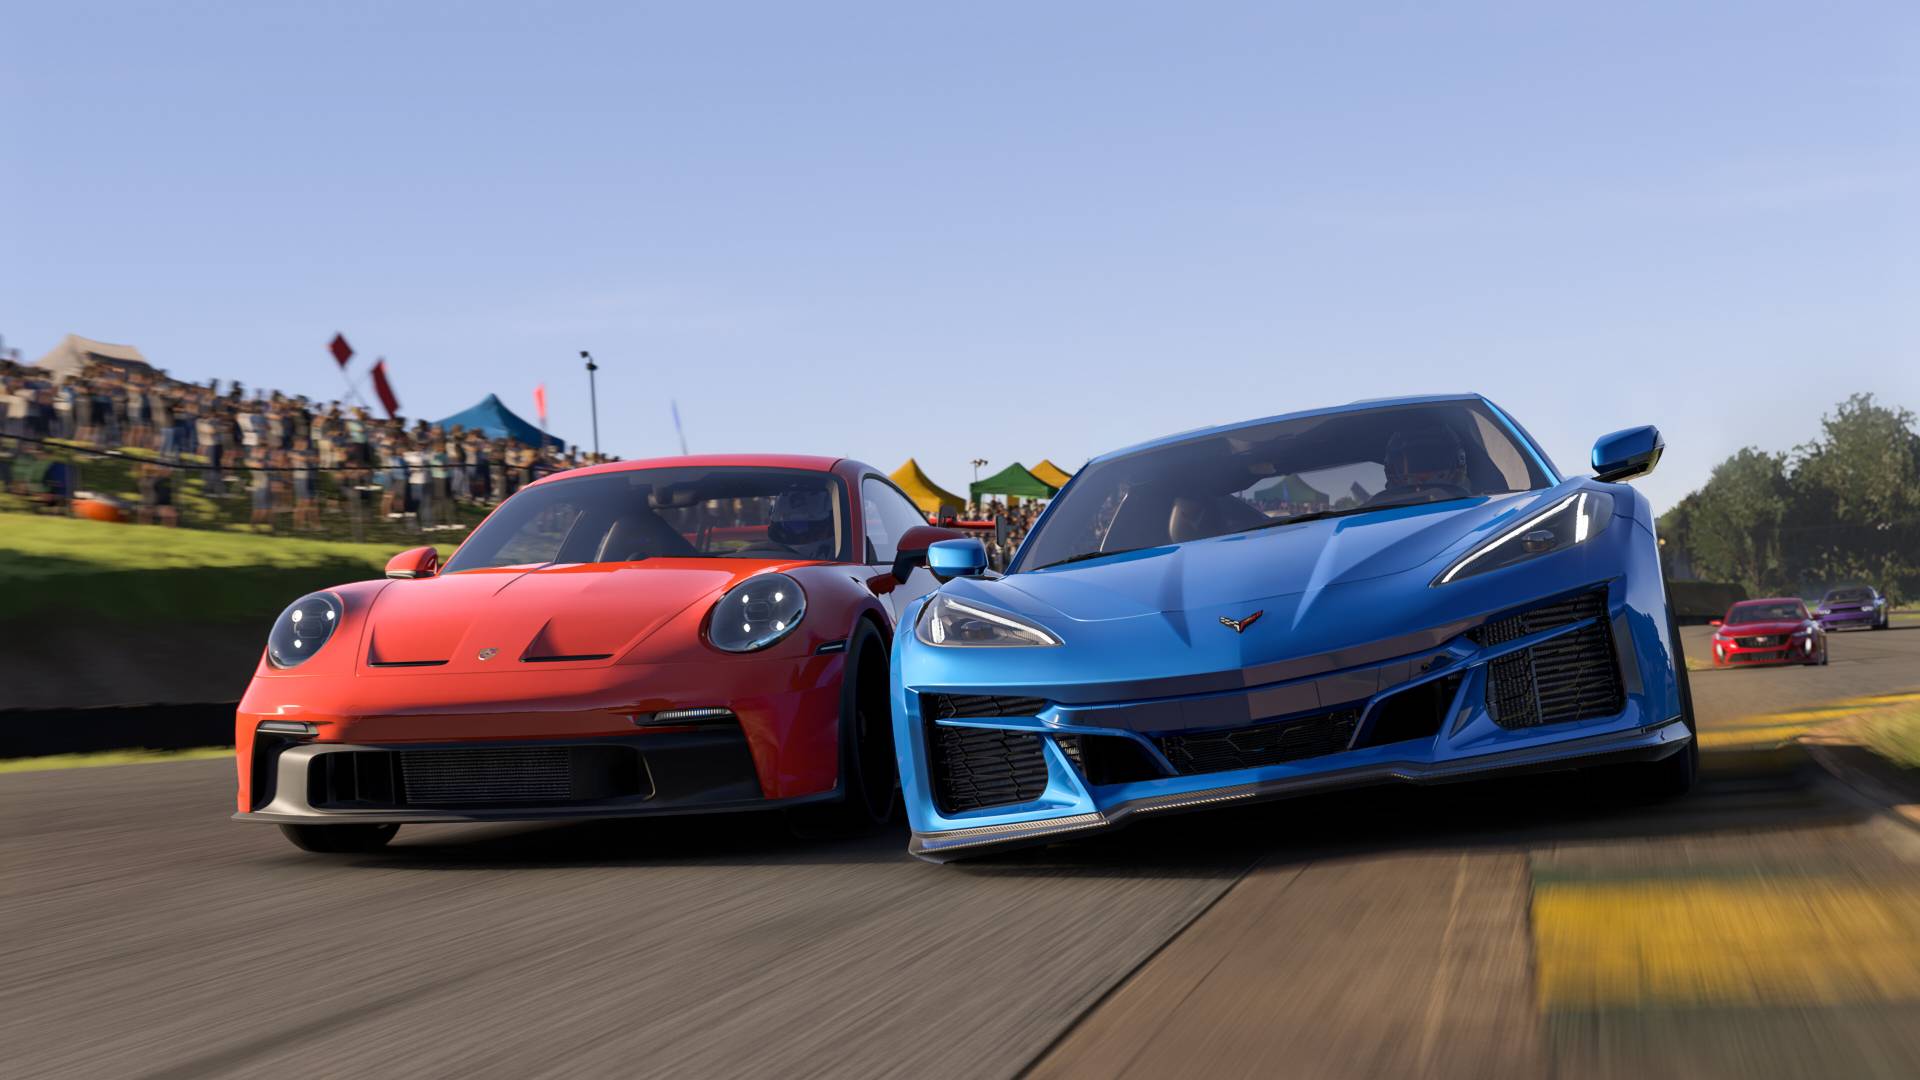 Forza Horizon 2 review: Our full verdict